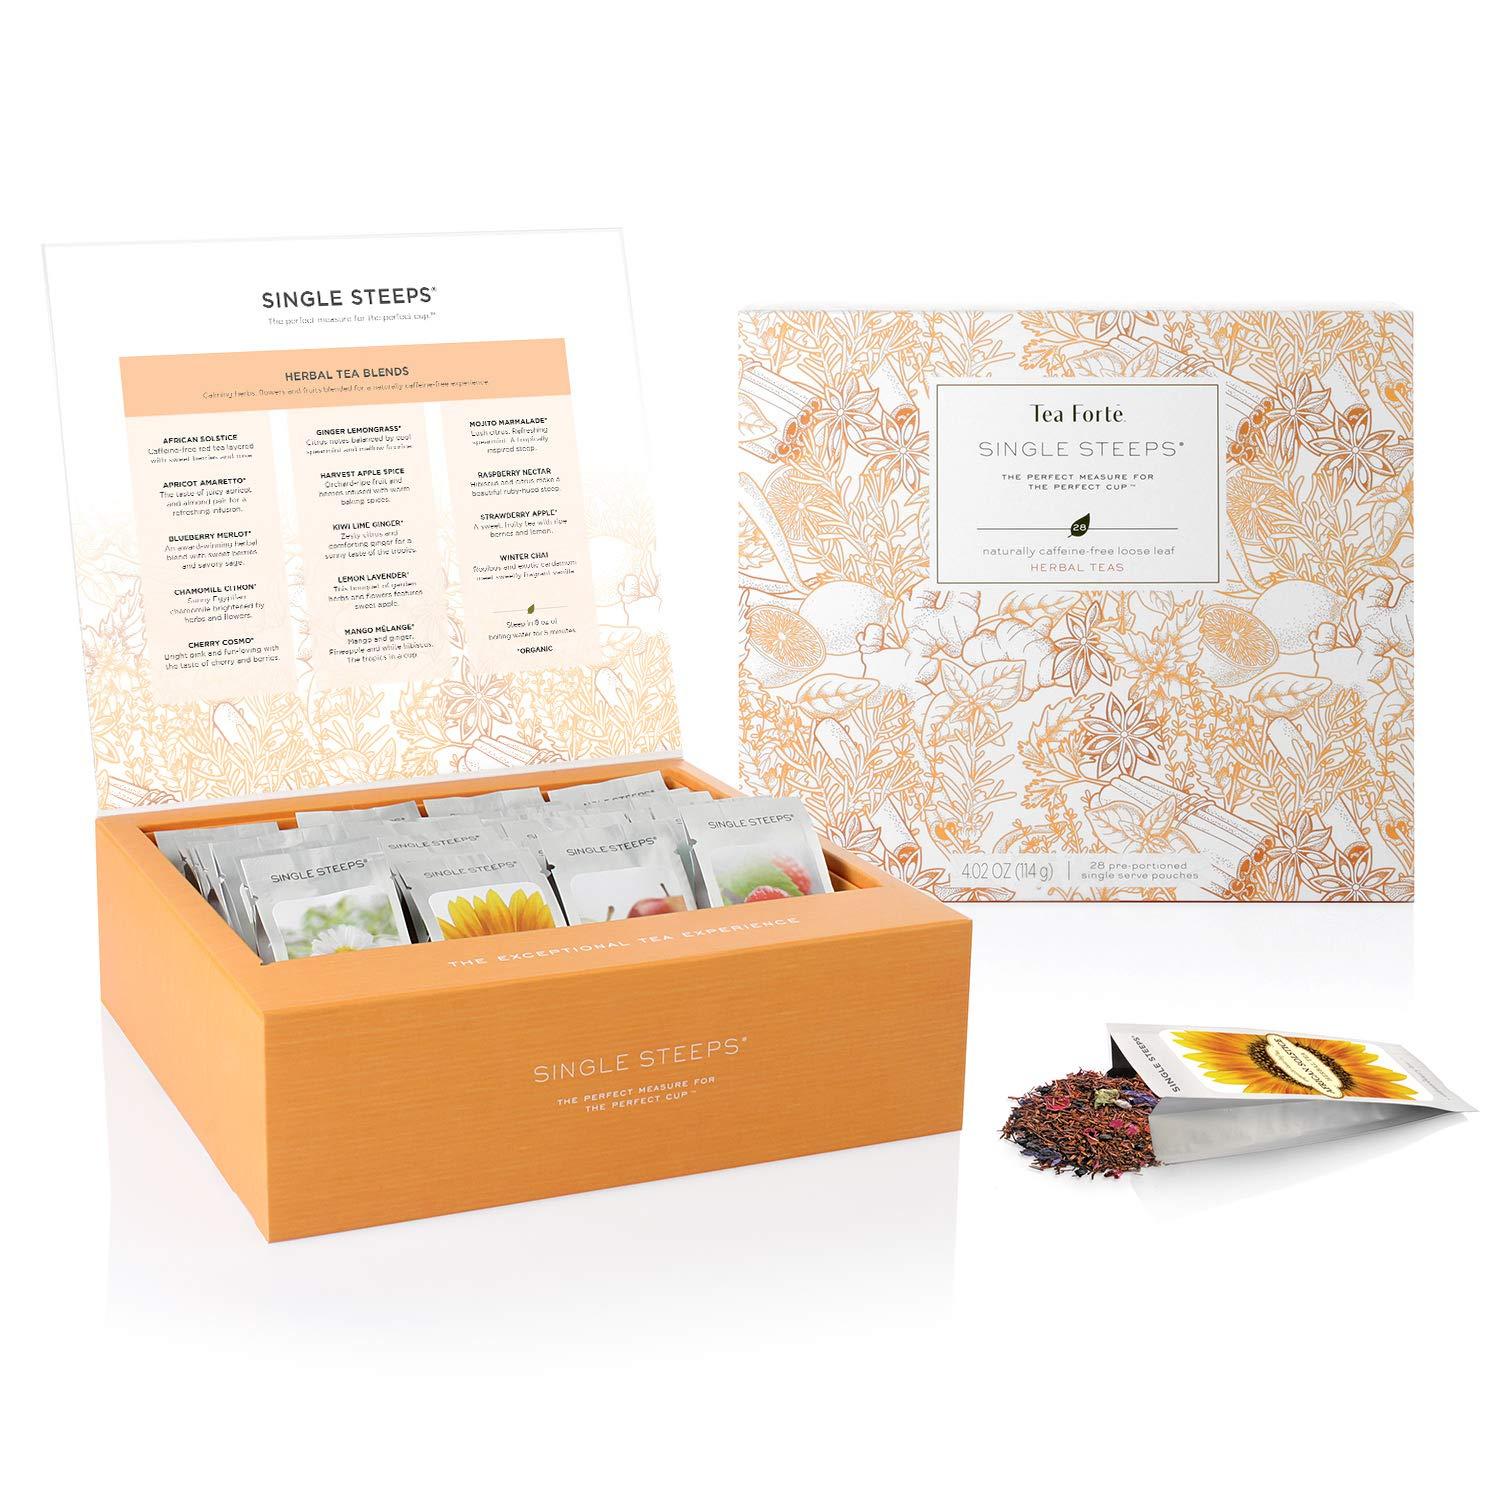 Tea Forte Herbal Teas Single Steeps Tea Chest Variety Gift Box for $19.60